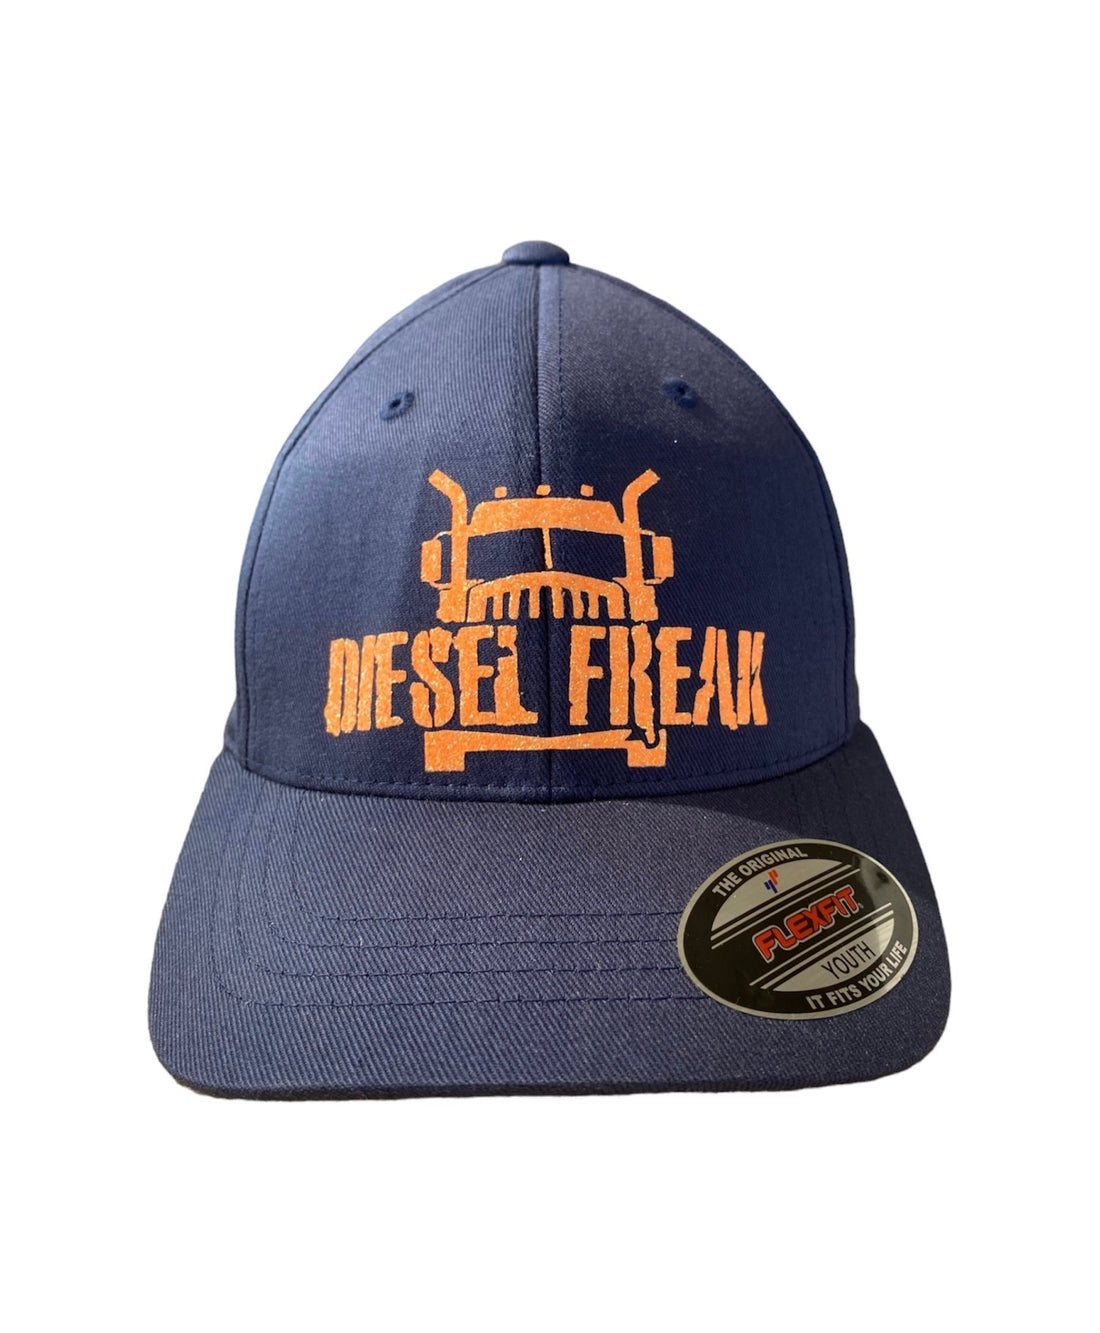 Youth Truckin Freak Navy and Orange Glitter Hat - Diesel Freak